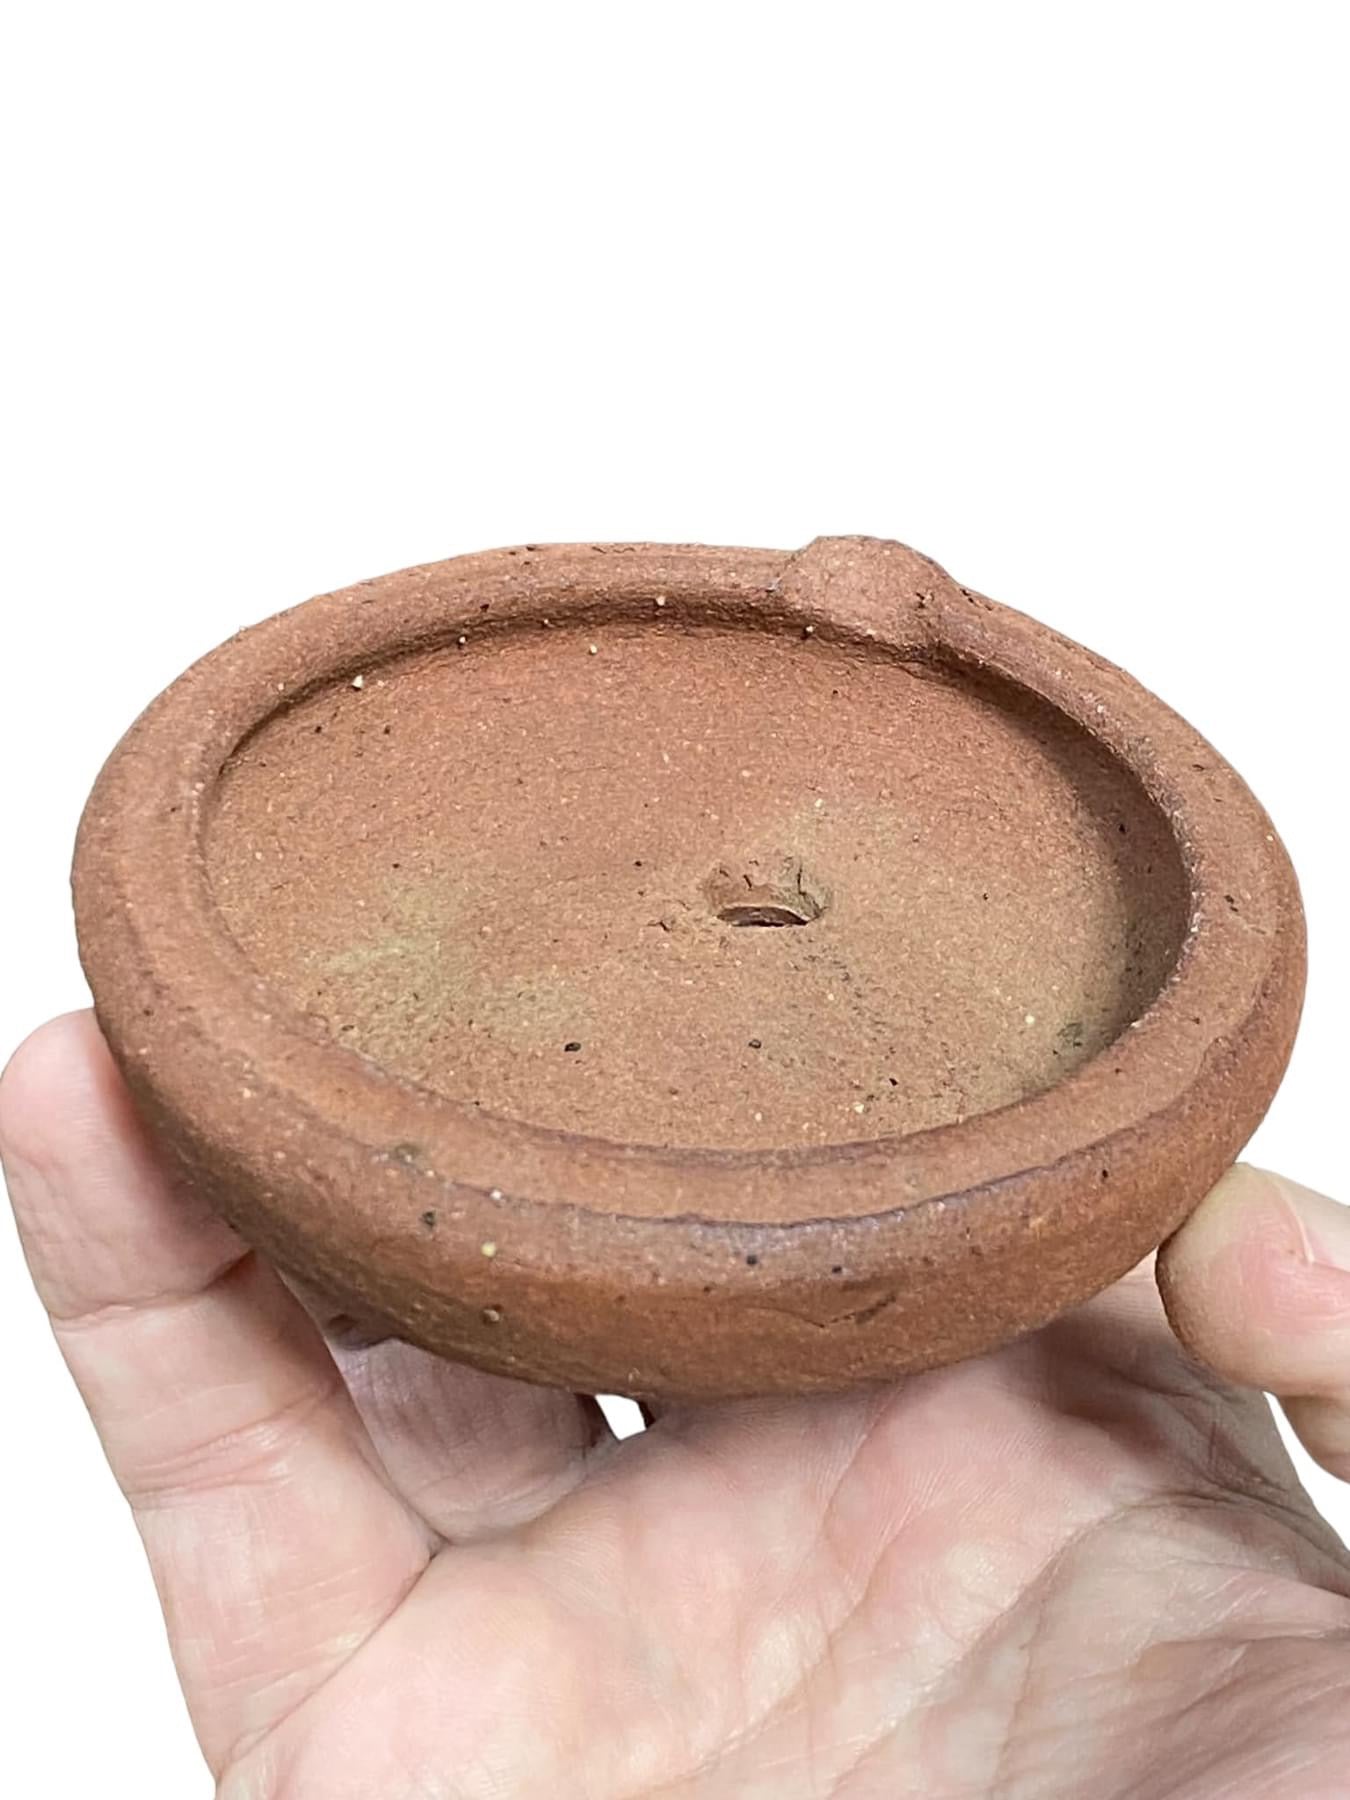 Yozan - Unglazed Handmade Bonsai Pot